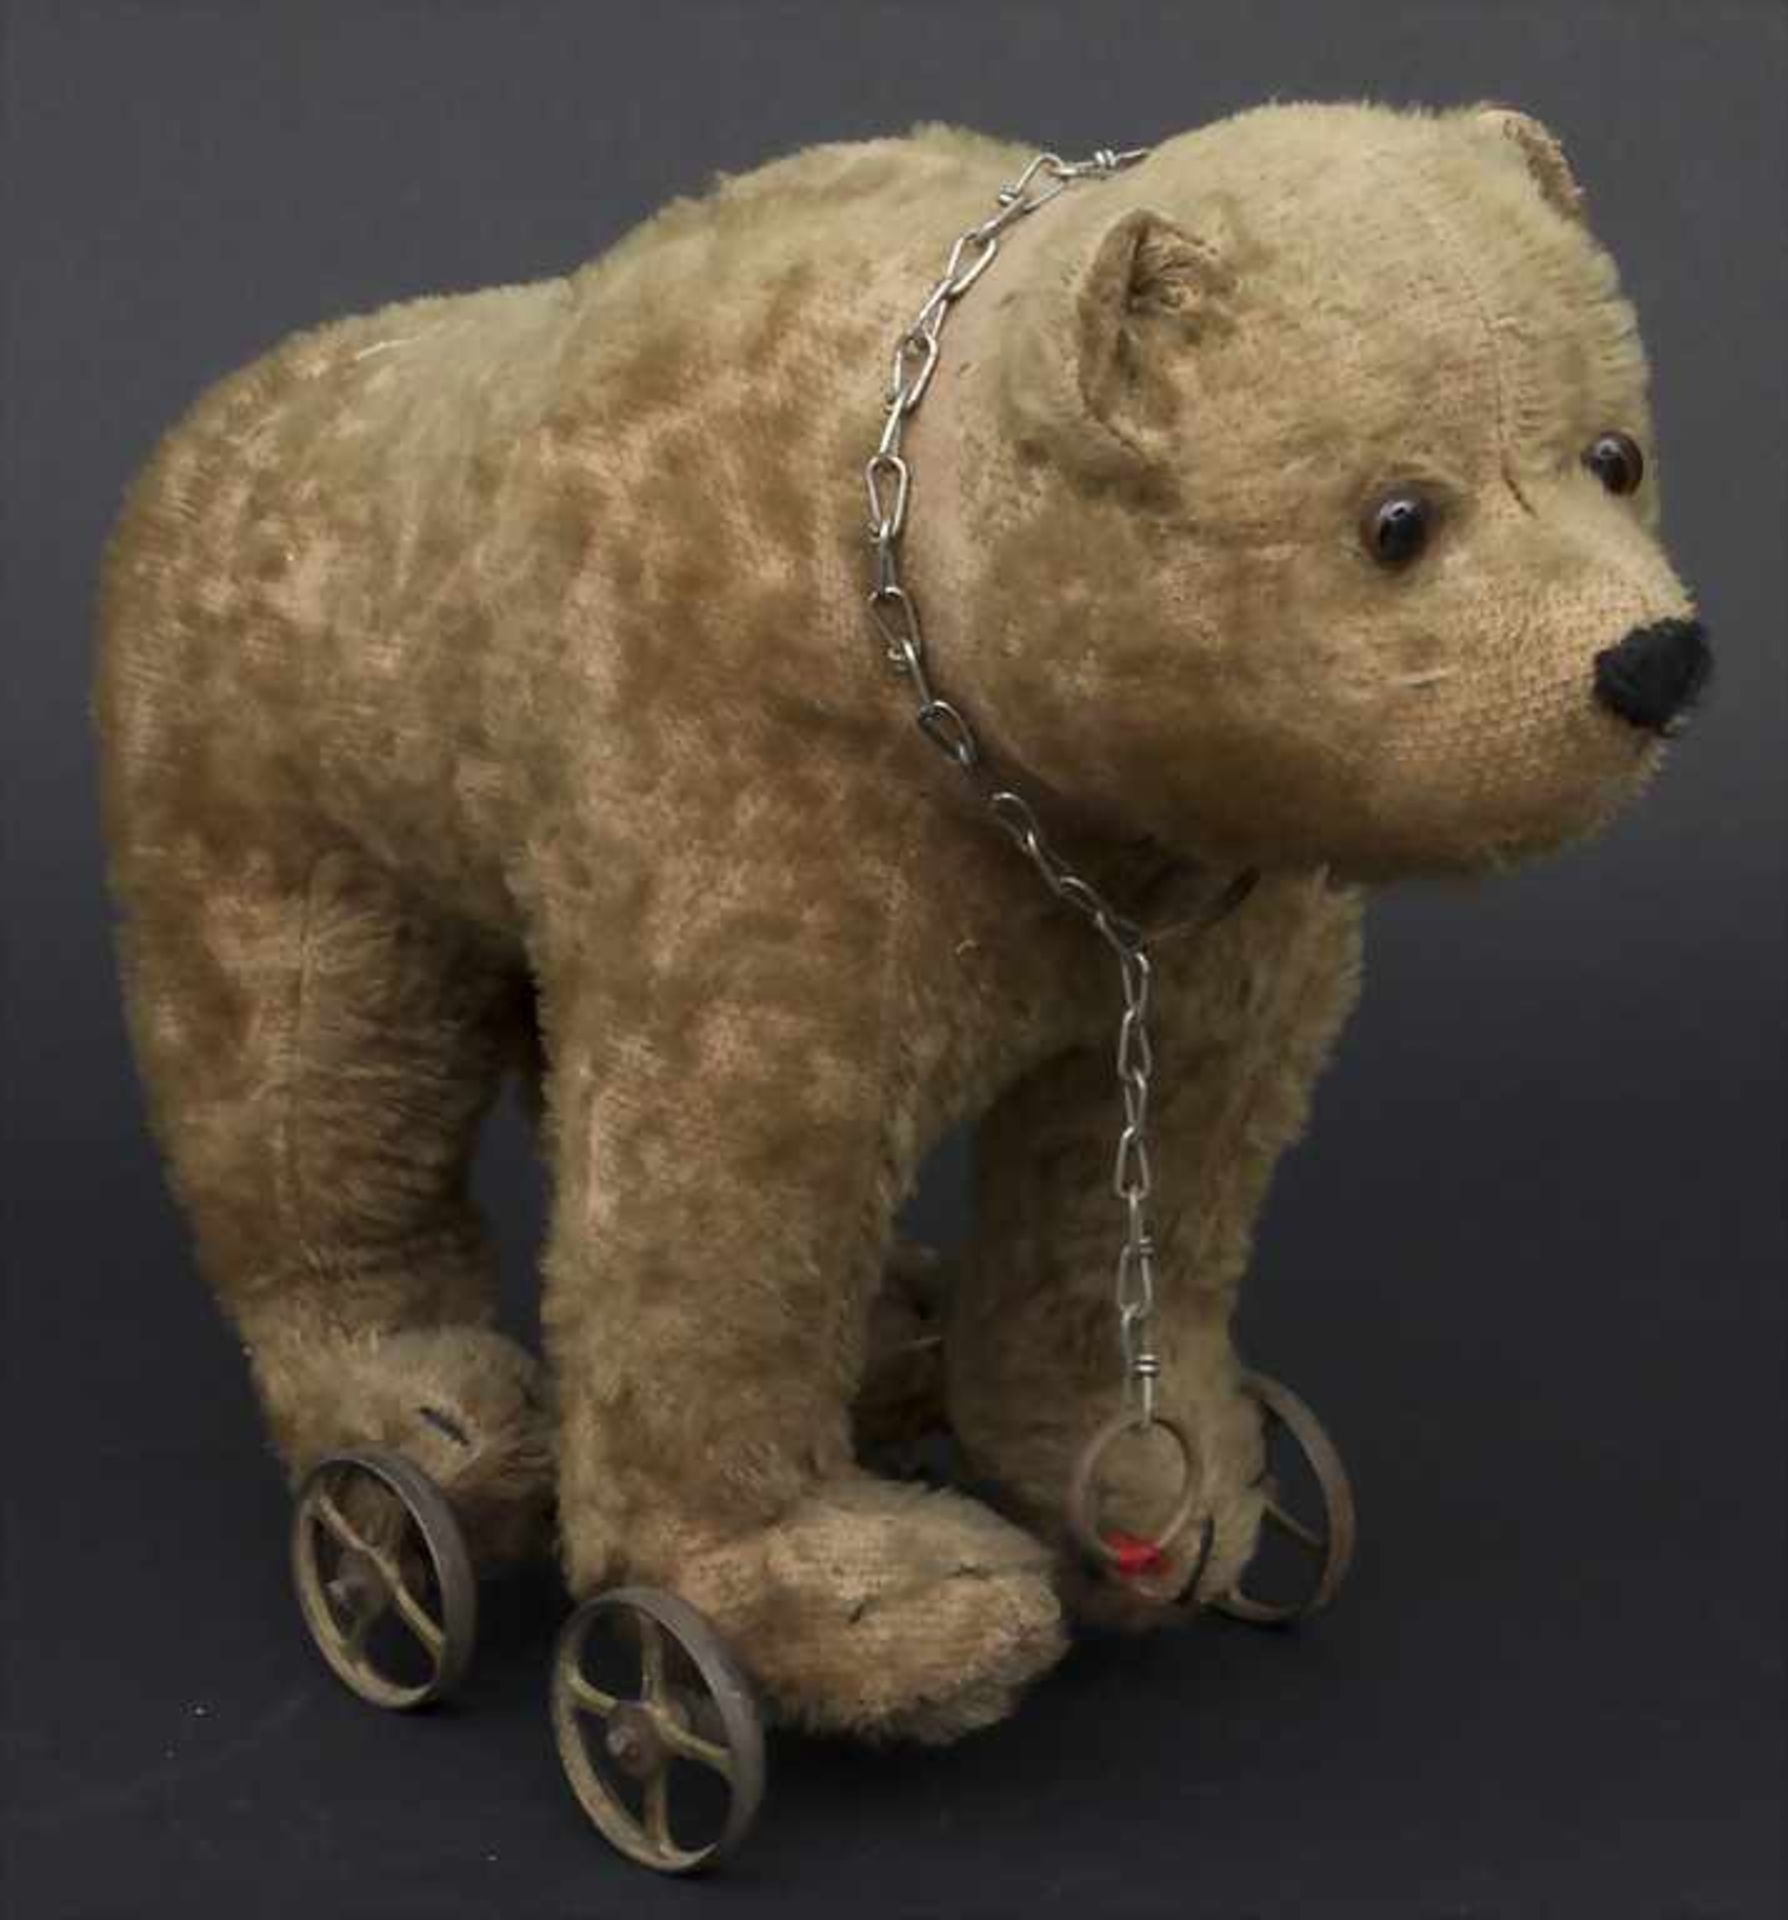 Spielzeug-Bär auf Rollen / A toy bear on wheels, um 1900Material: Mohairfell, Glasaugen, Körper